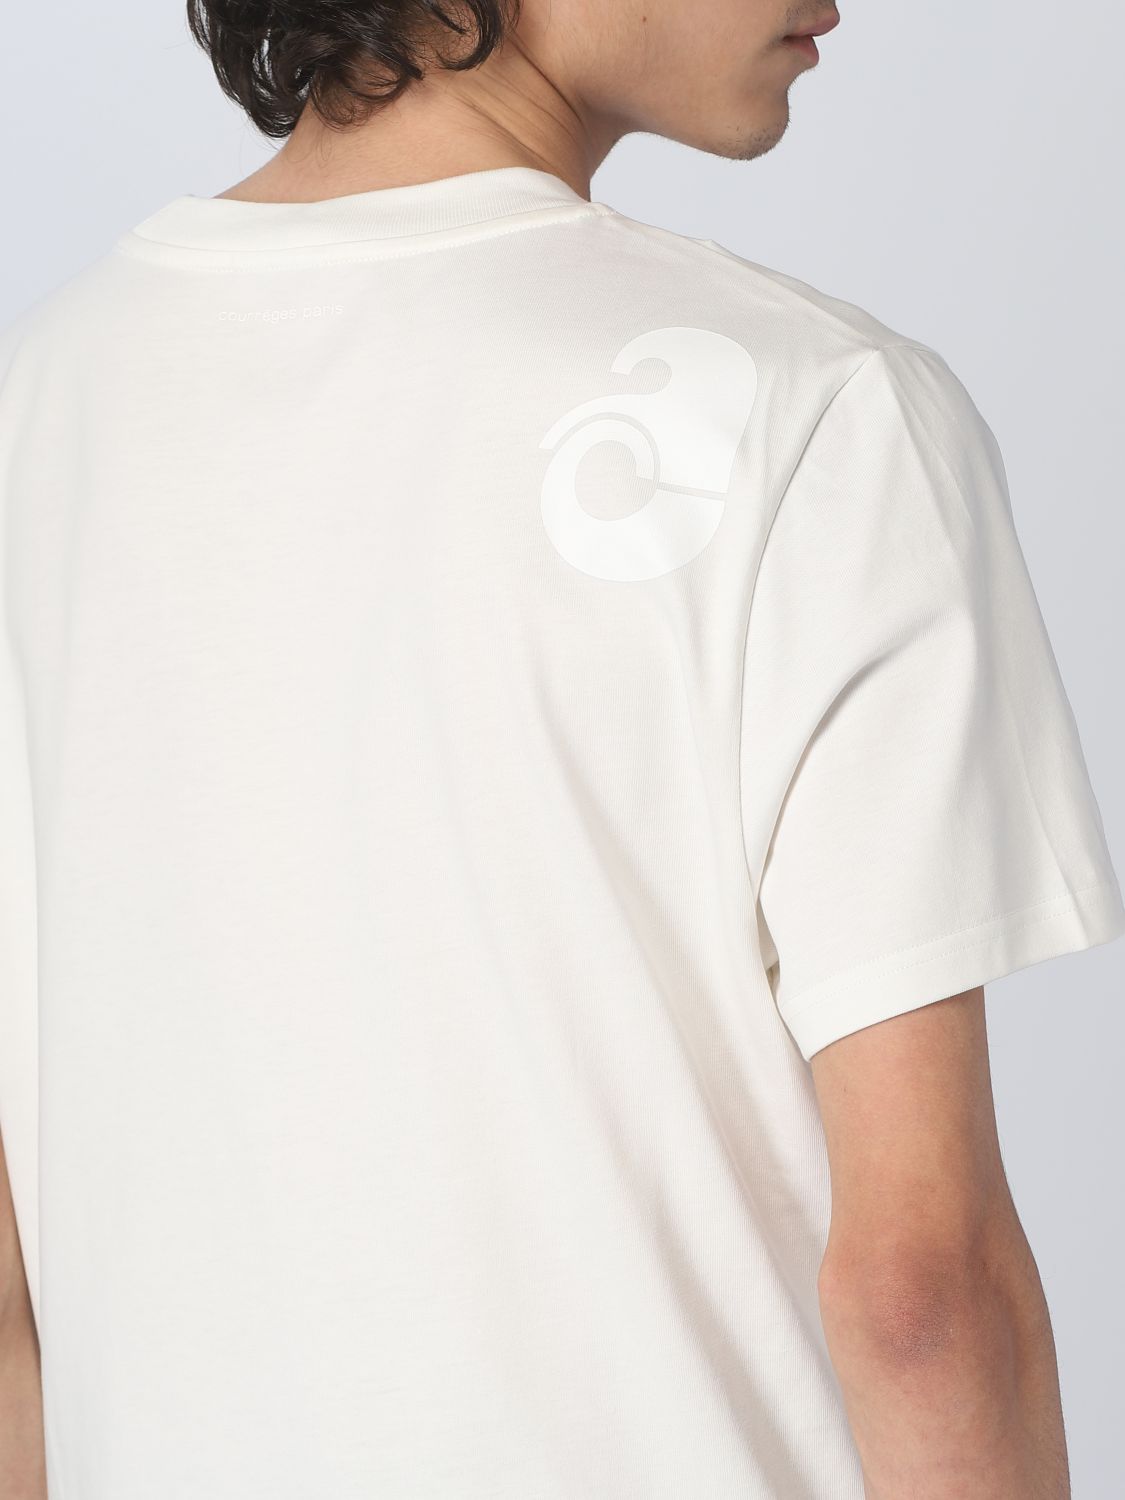 Camiseta Courrèges: Camiseta Courrèges para hombre blanco 4